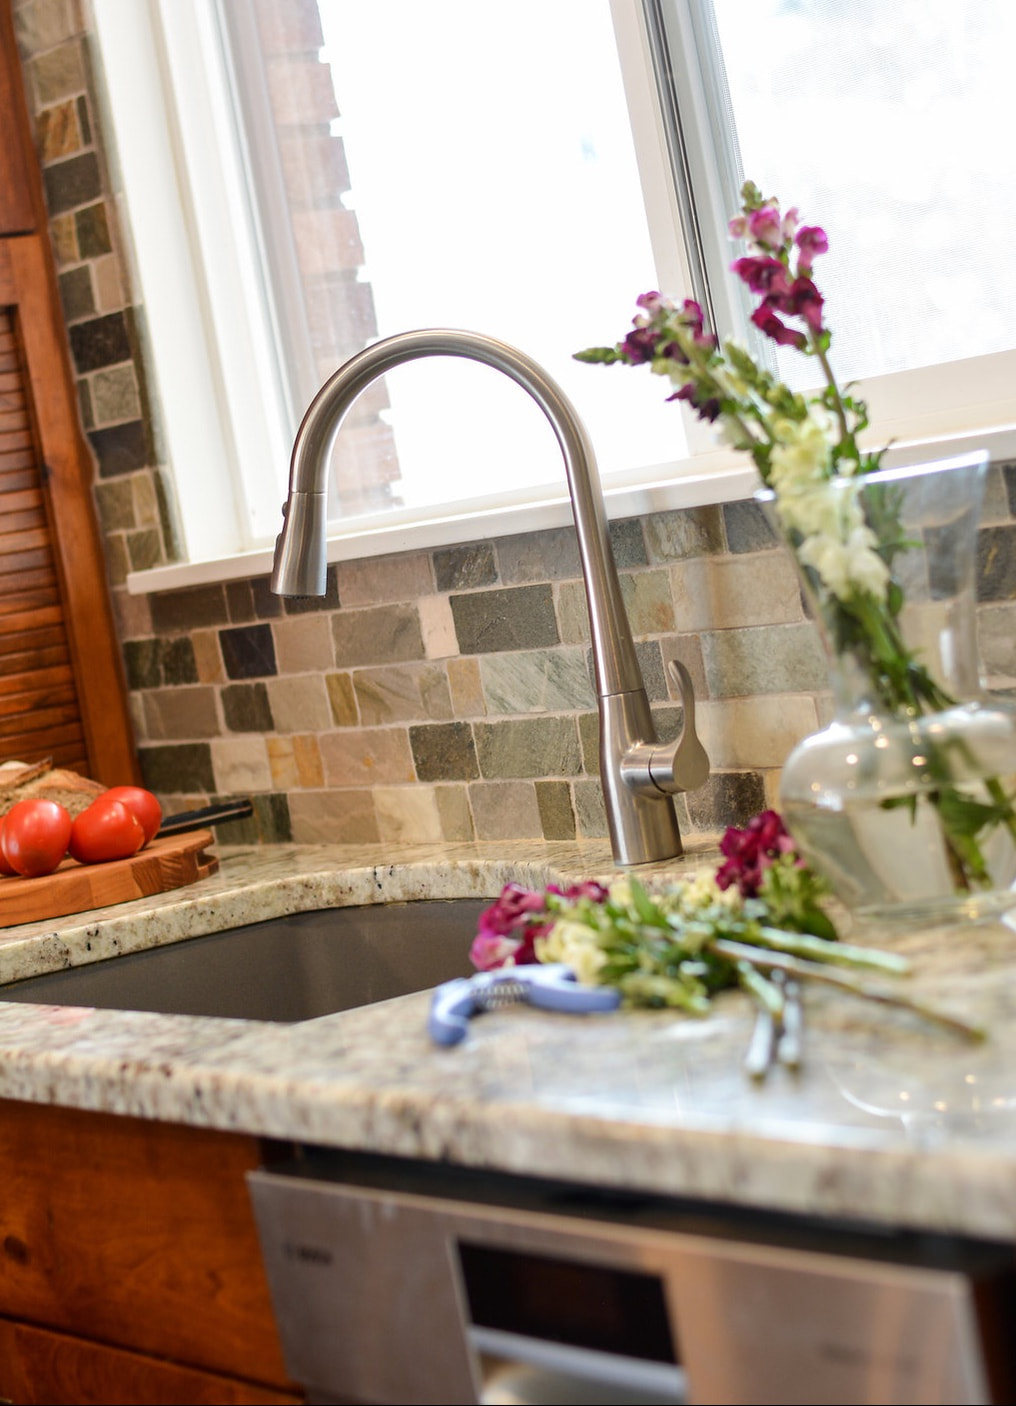 Kitchen sink with slate backsplash and cut flowers